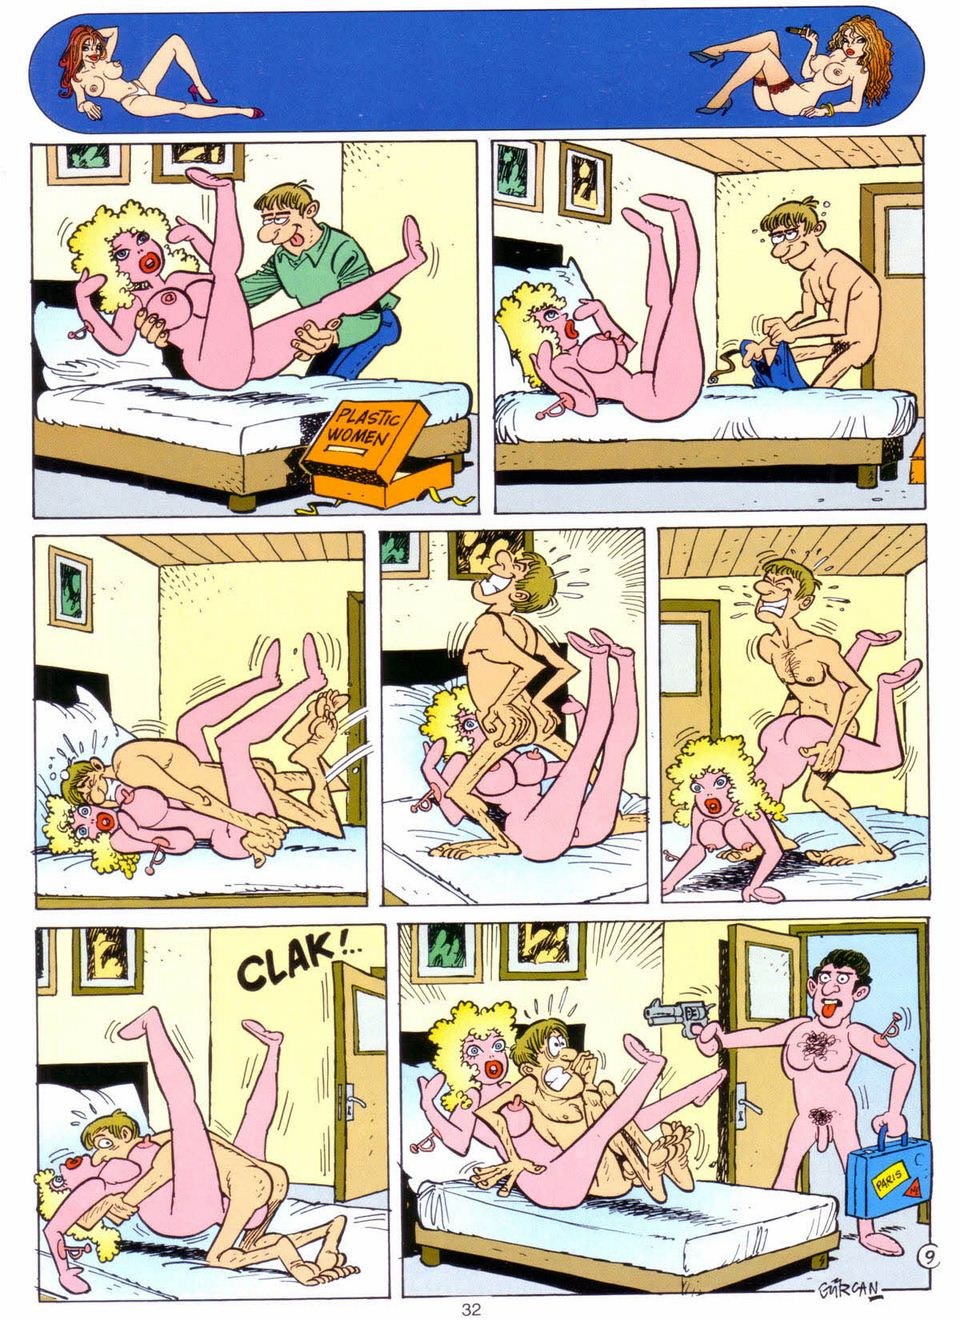 Nude comic strips